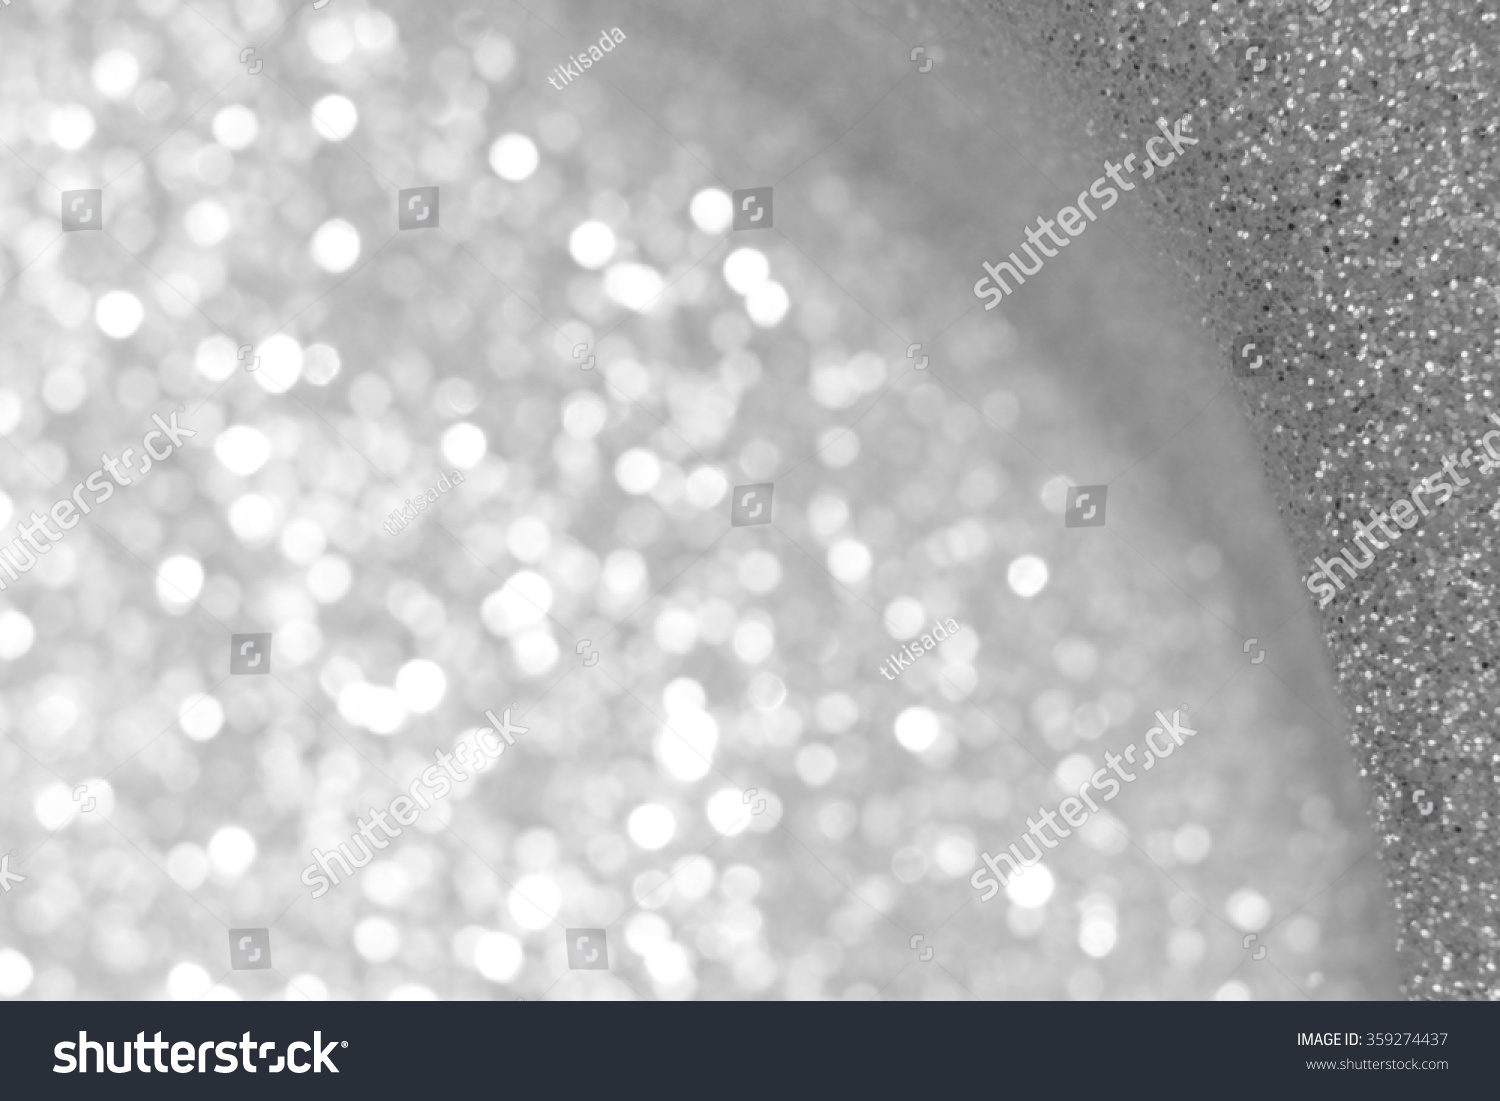 Silver Glitter Blur Background Stock Photo 359274437 - Shutterstock